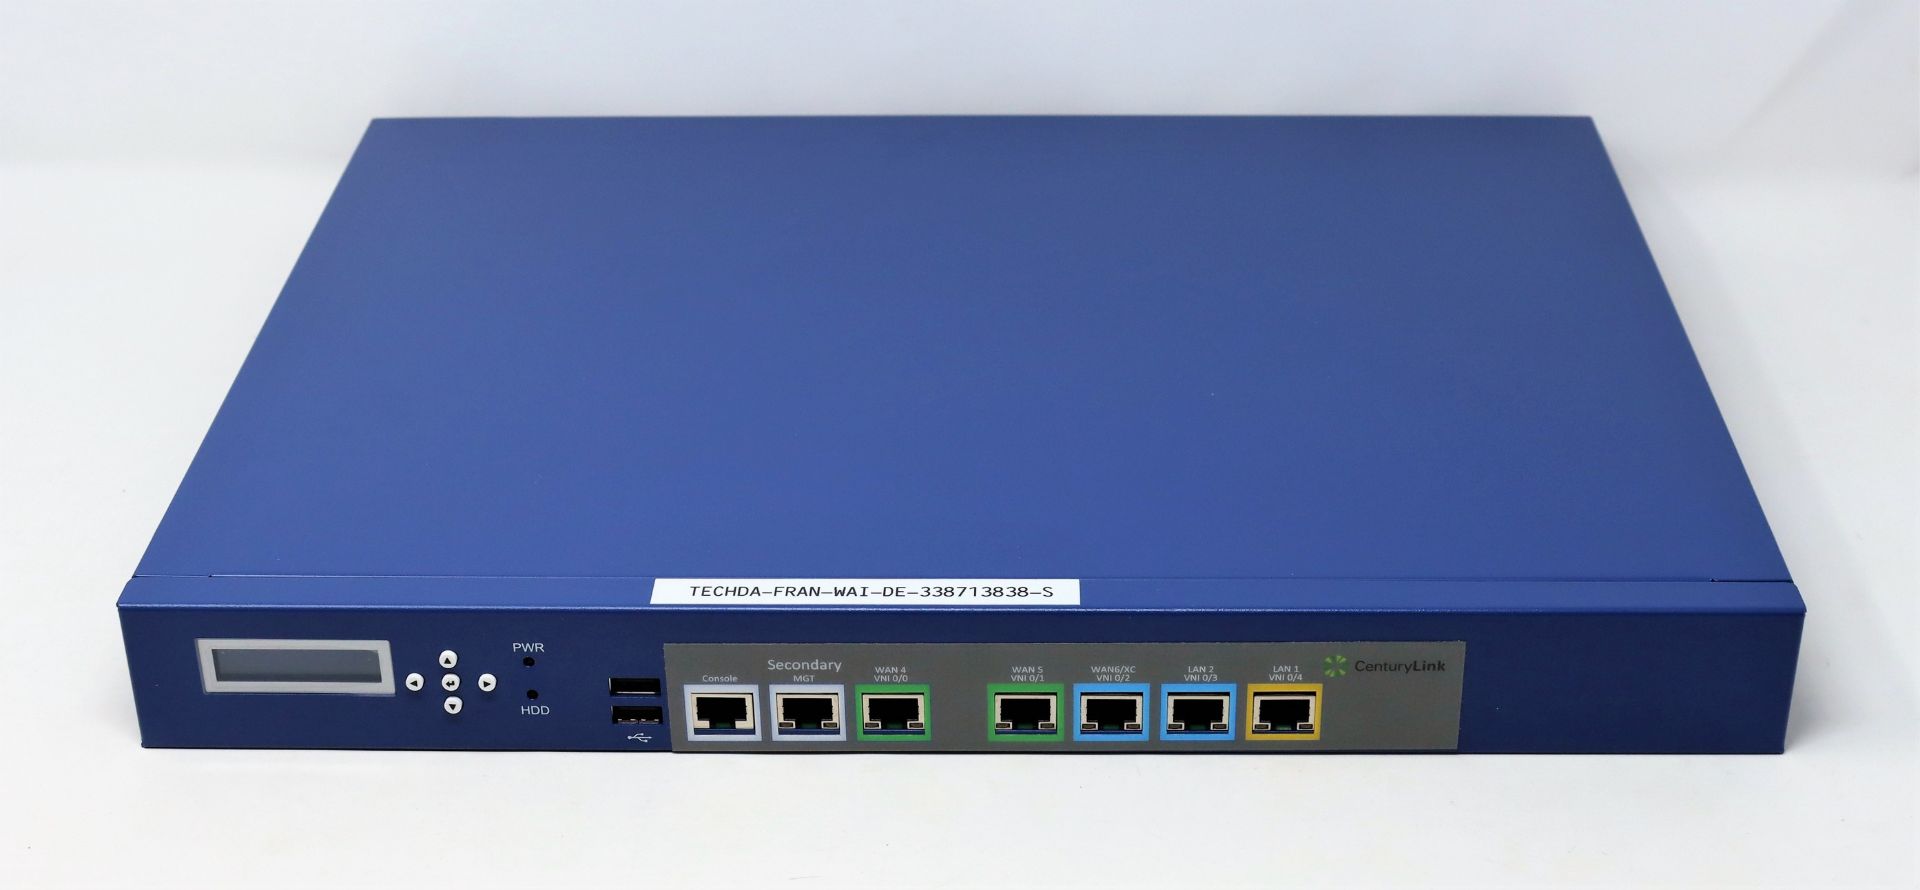 A boxed Advantech FWA-2320 1U Rackmount Network Appliance with Intel Atom Processor (PN: FWA-